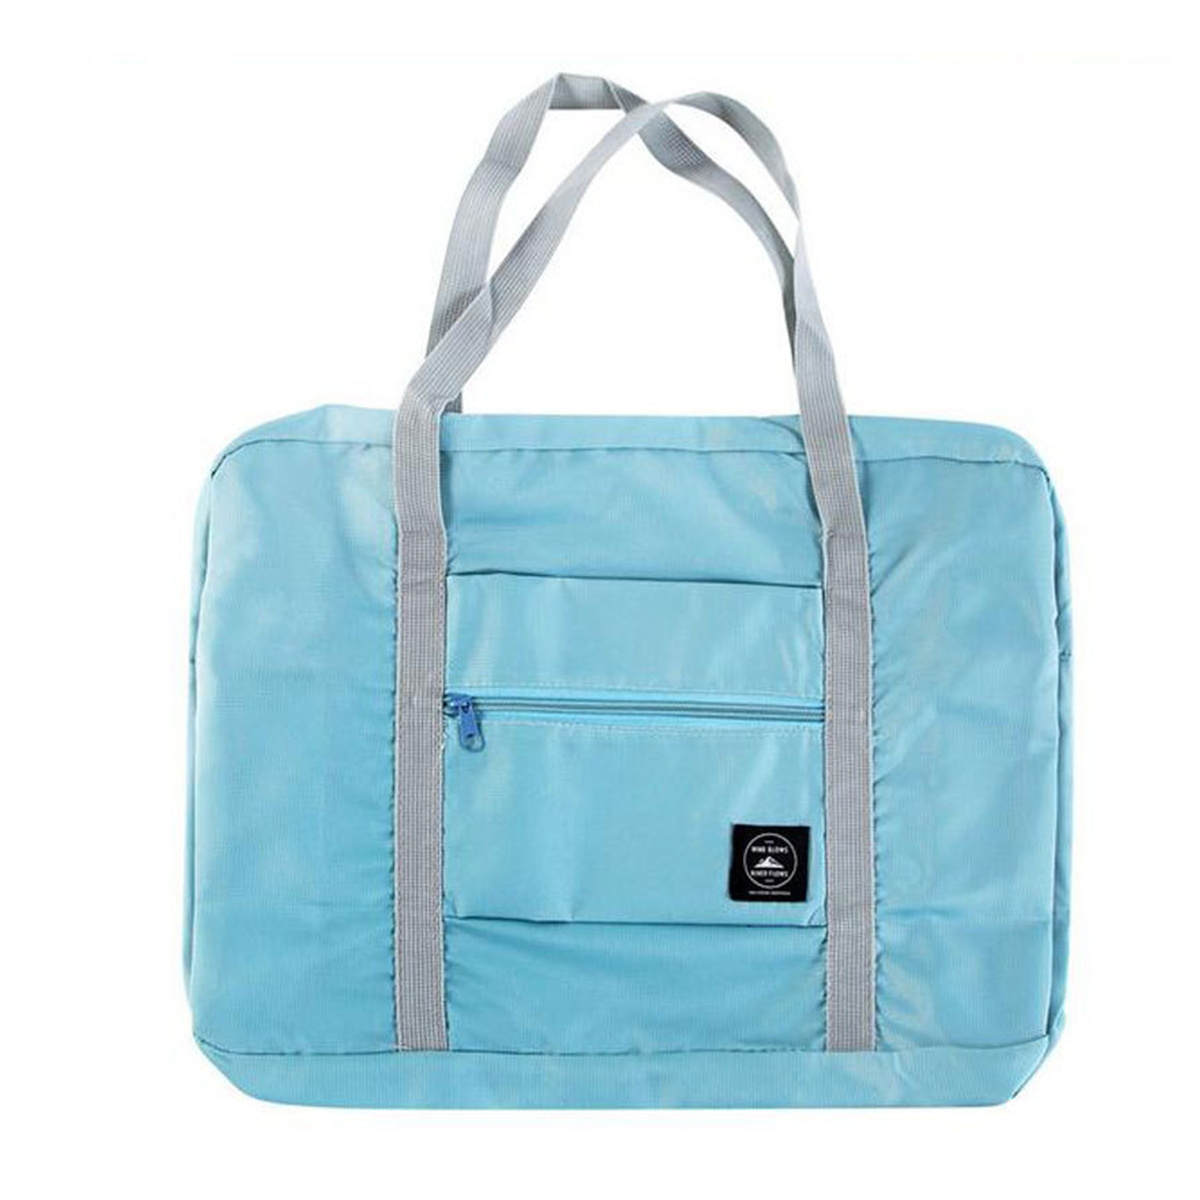 Portable-Reusable-Folding-Travel-Handbag-Cosmetic-Strong-Carrier-Storage-Bag-1658627-7